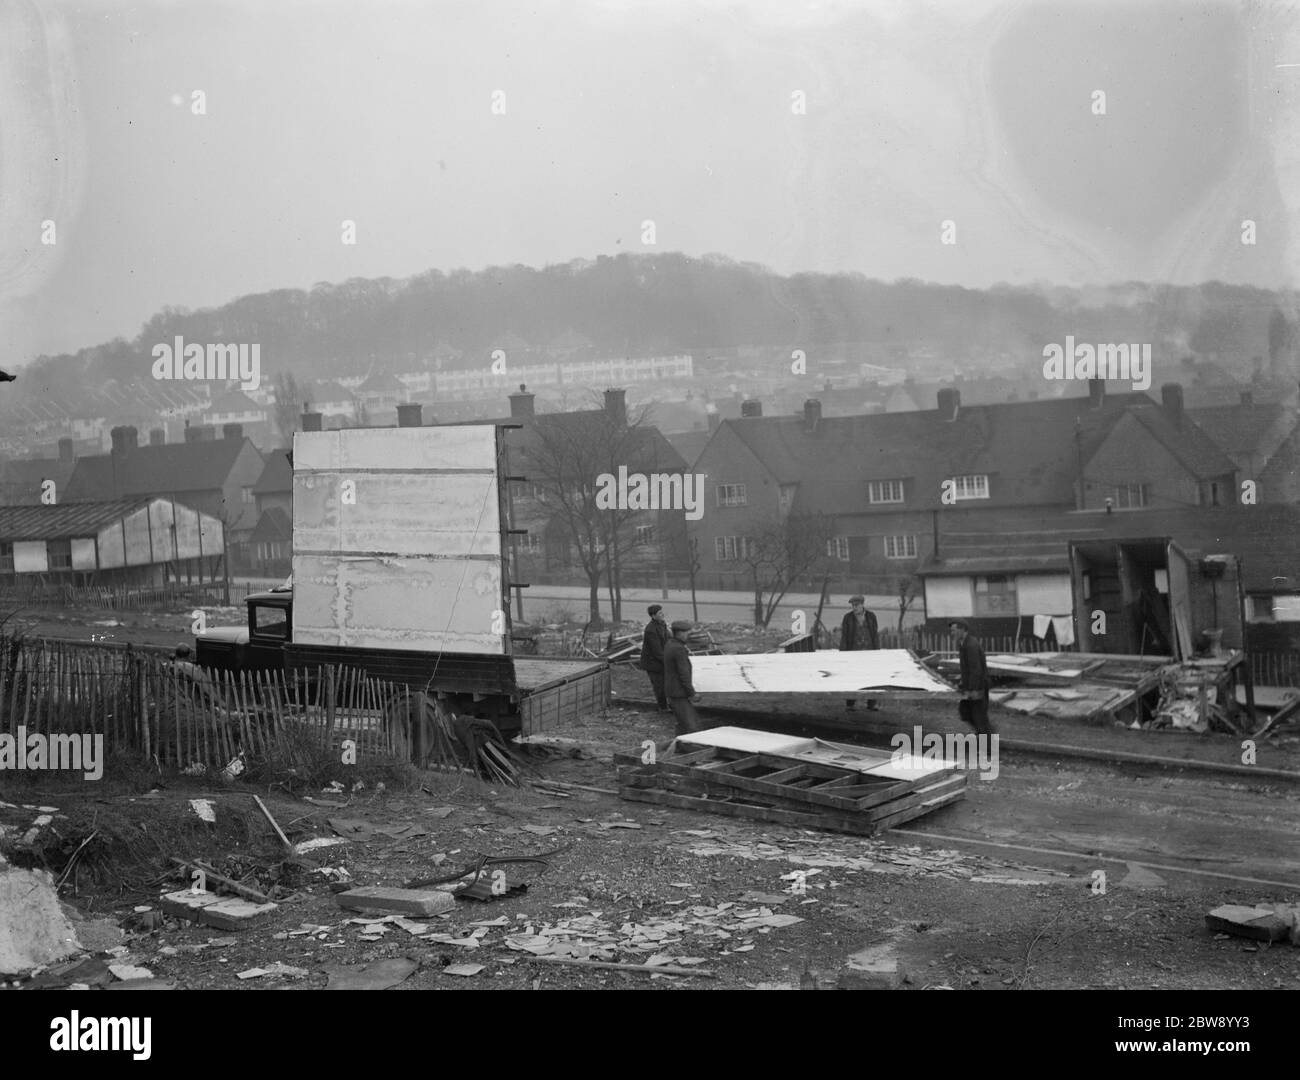 La retirada de los hutments del pasillo del pozo - la vivienda temporal. 1936 Foto de stock